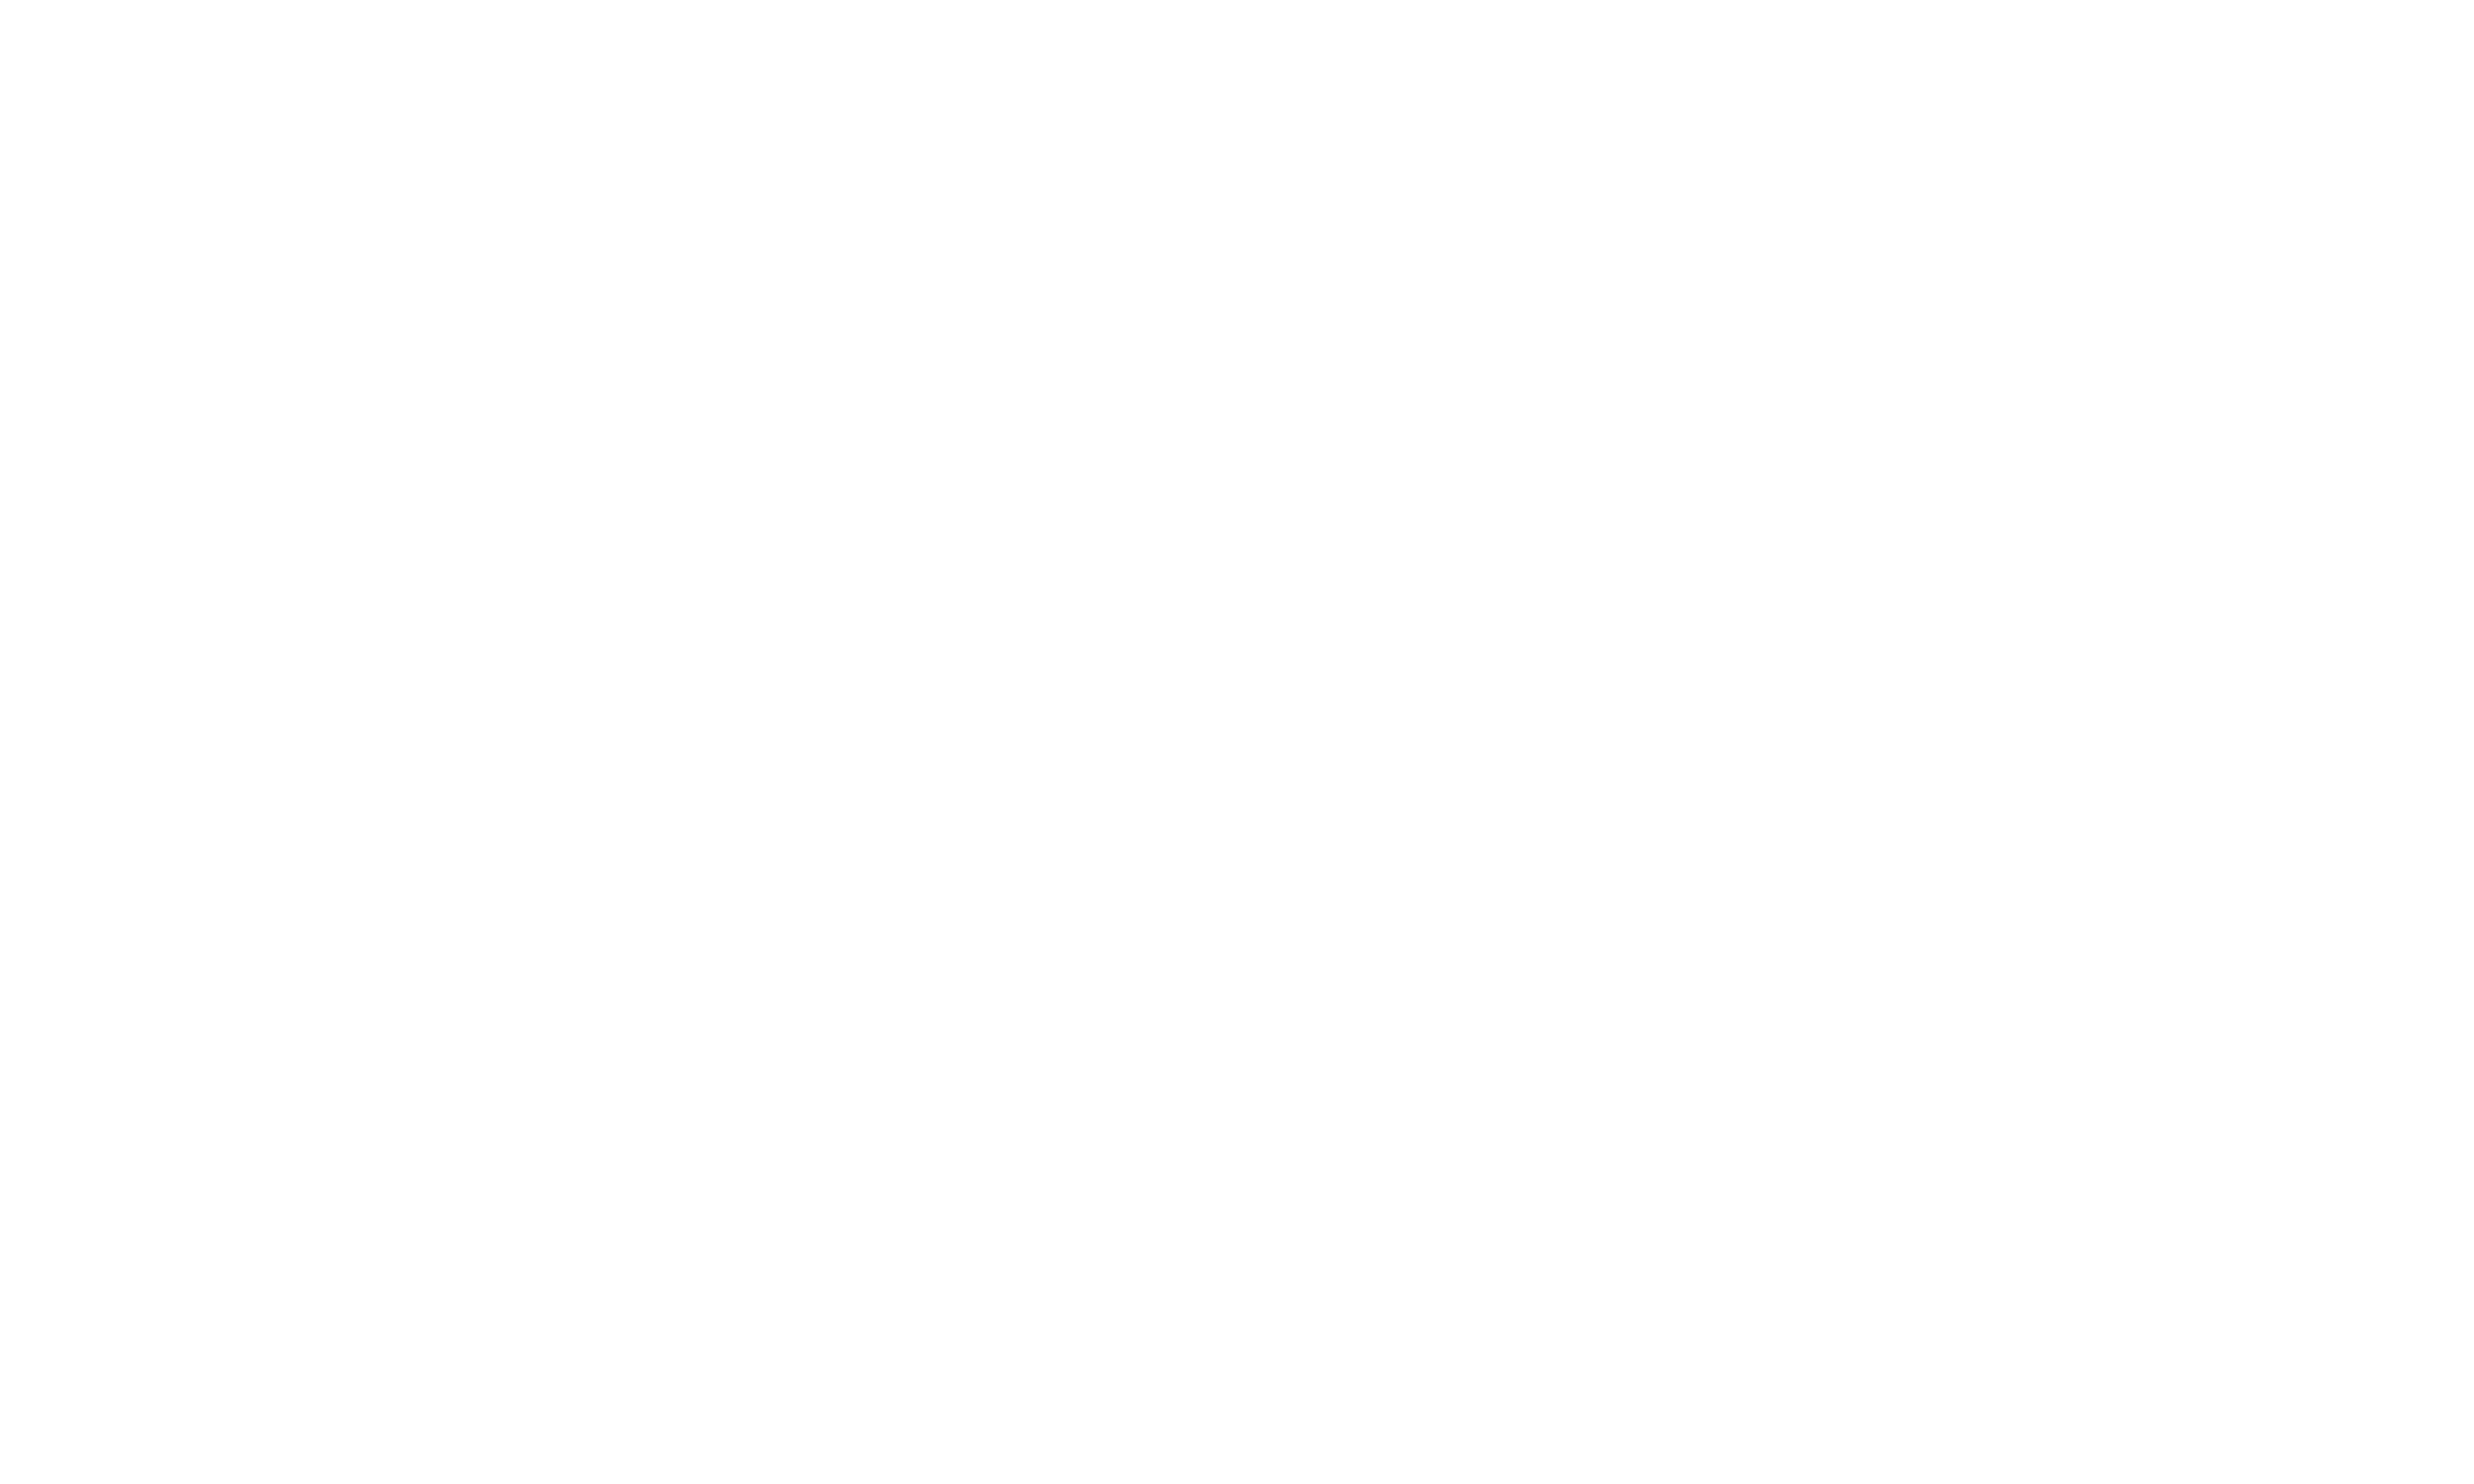 Imported Exotics